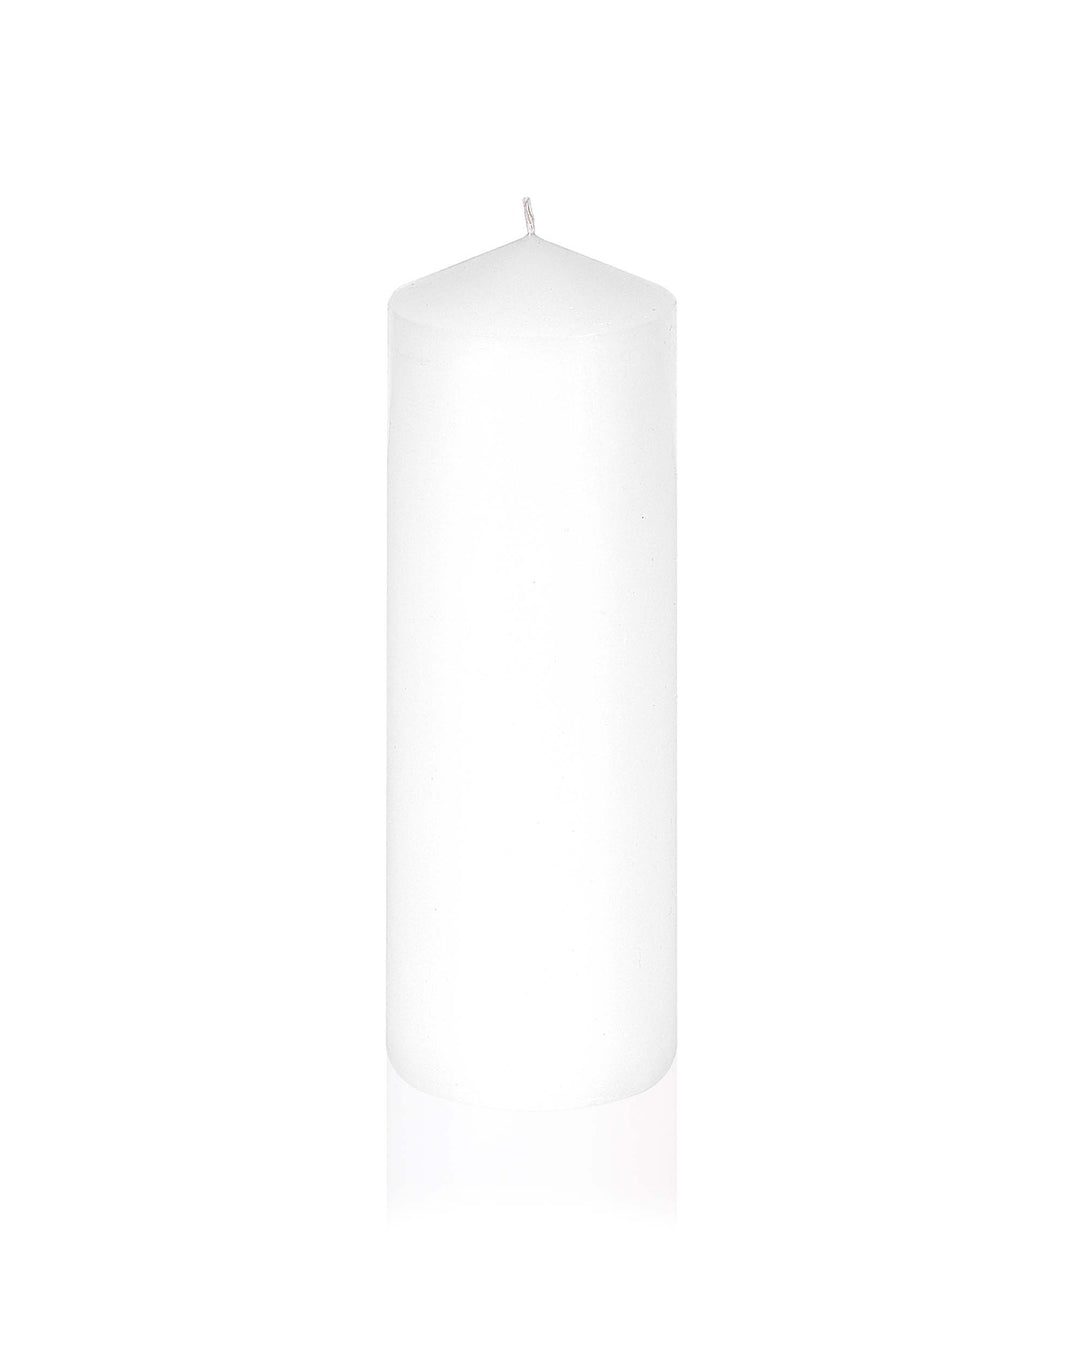 7.5cm x 20cm Pillar Candle